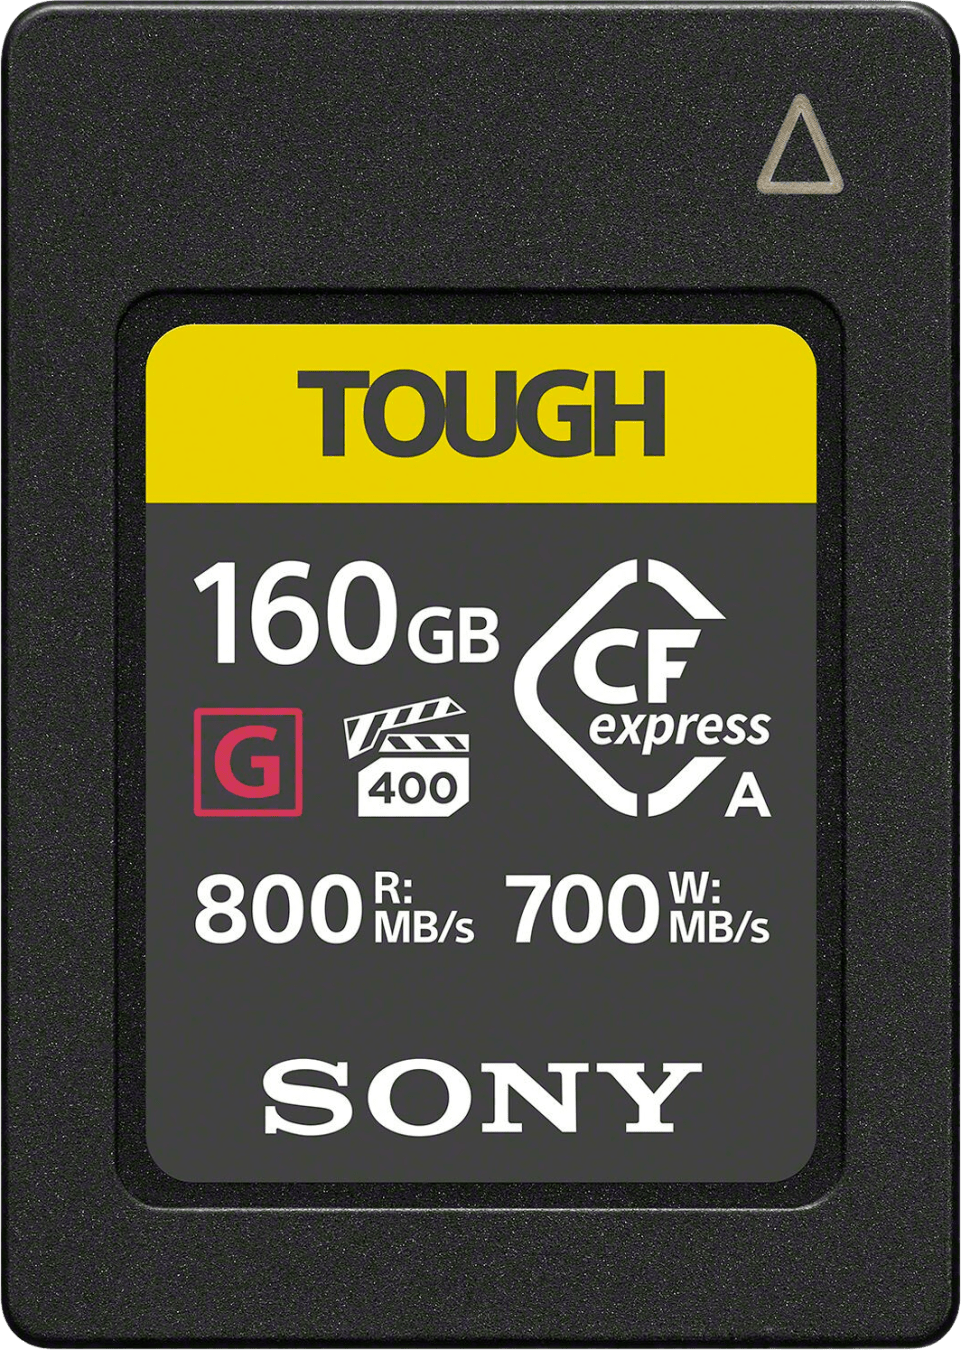 Sony TOUGH CFexpress Type-A 160GB